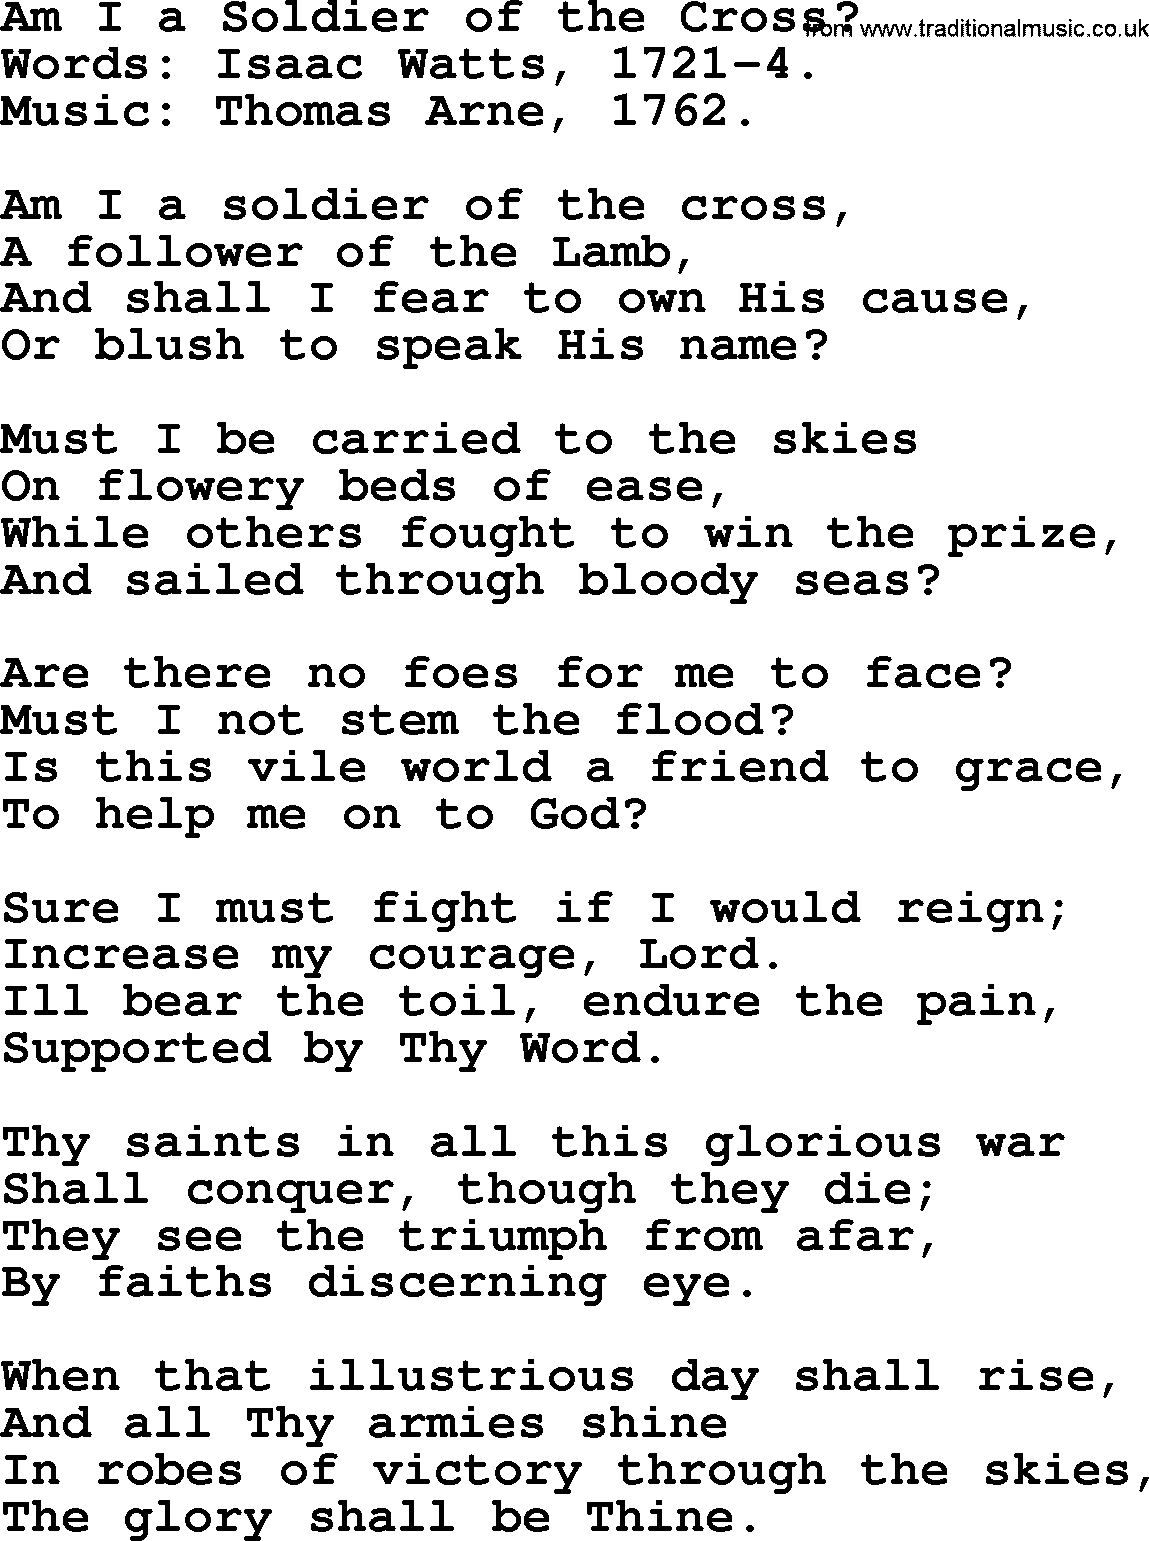 Isaac Watts Christian hymn: Am I a Soldier of the Cross_- lyricss